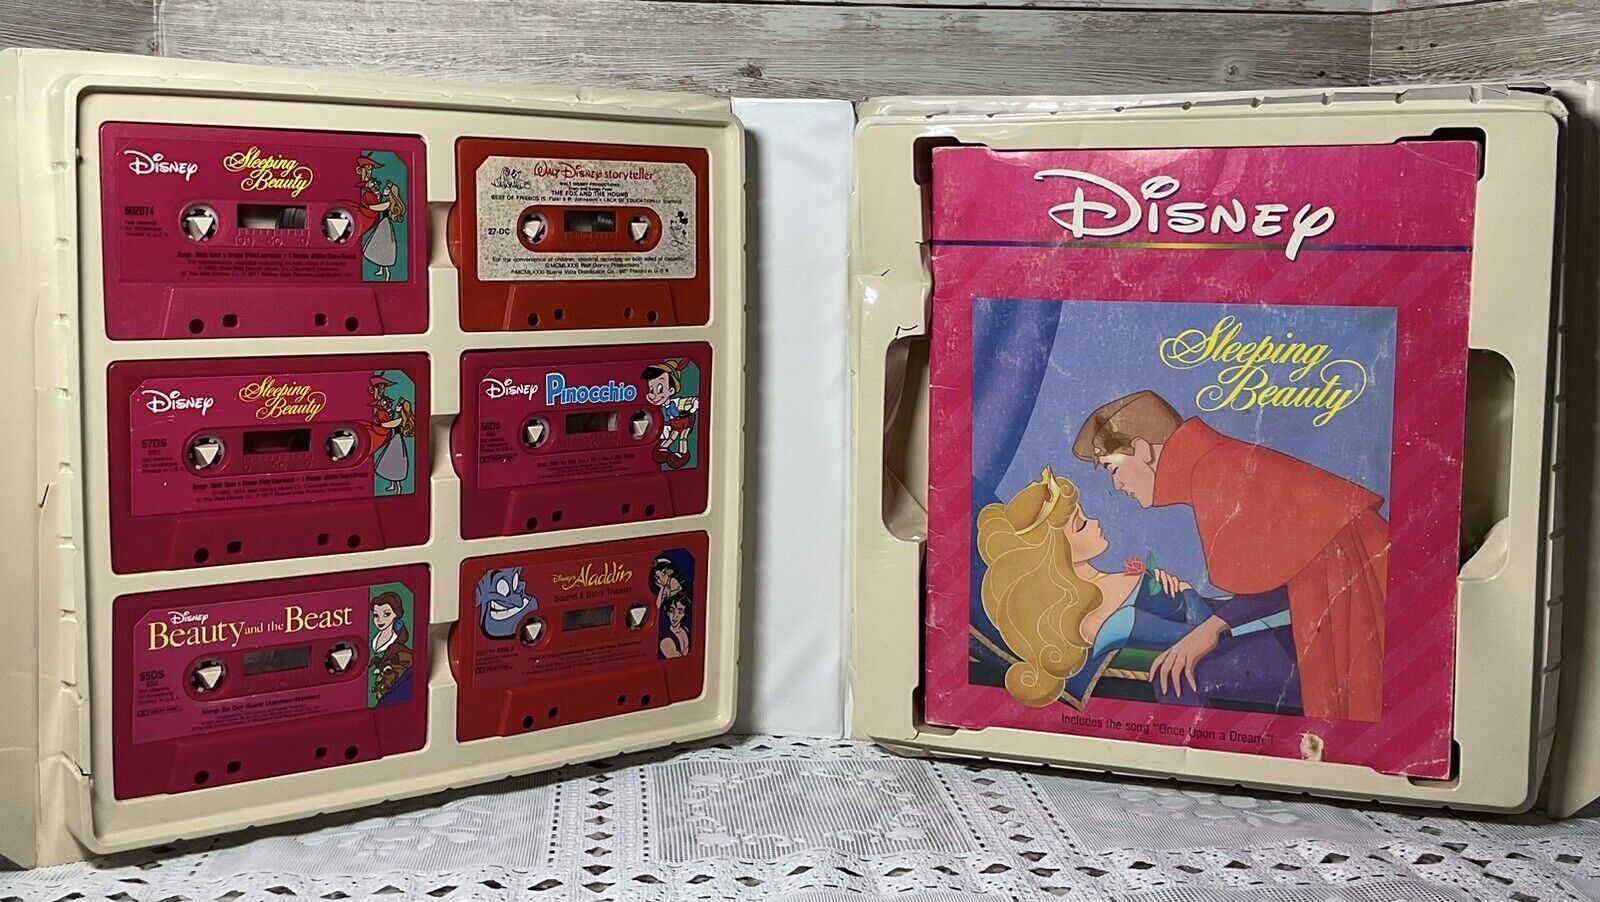 Disney Storyteller Read Along Cassette Tape and Book Set Vintage